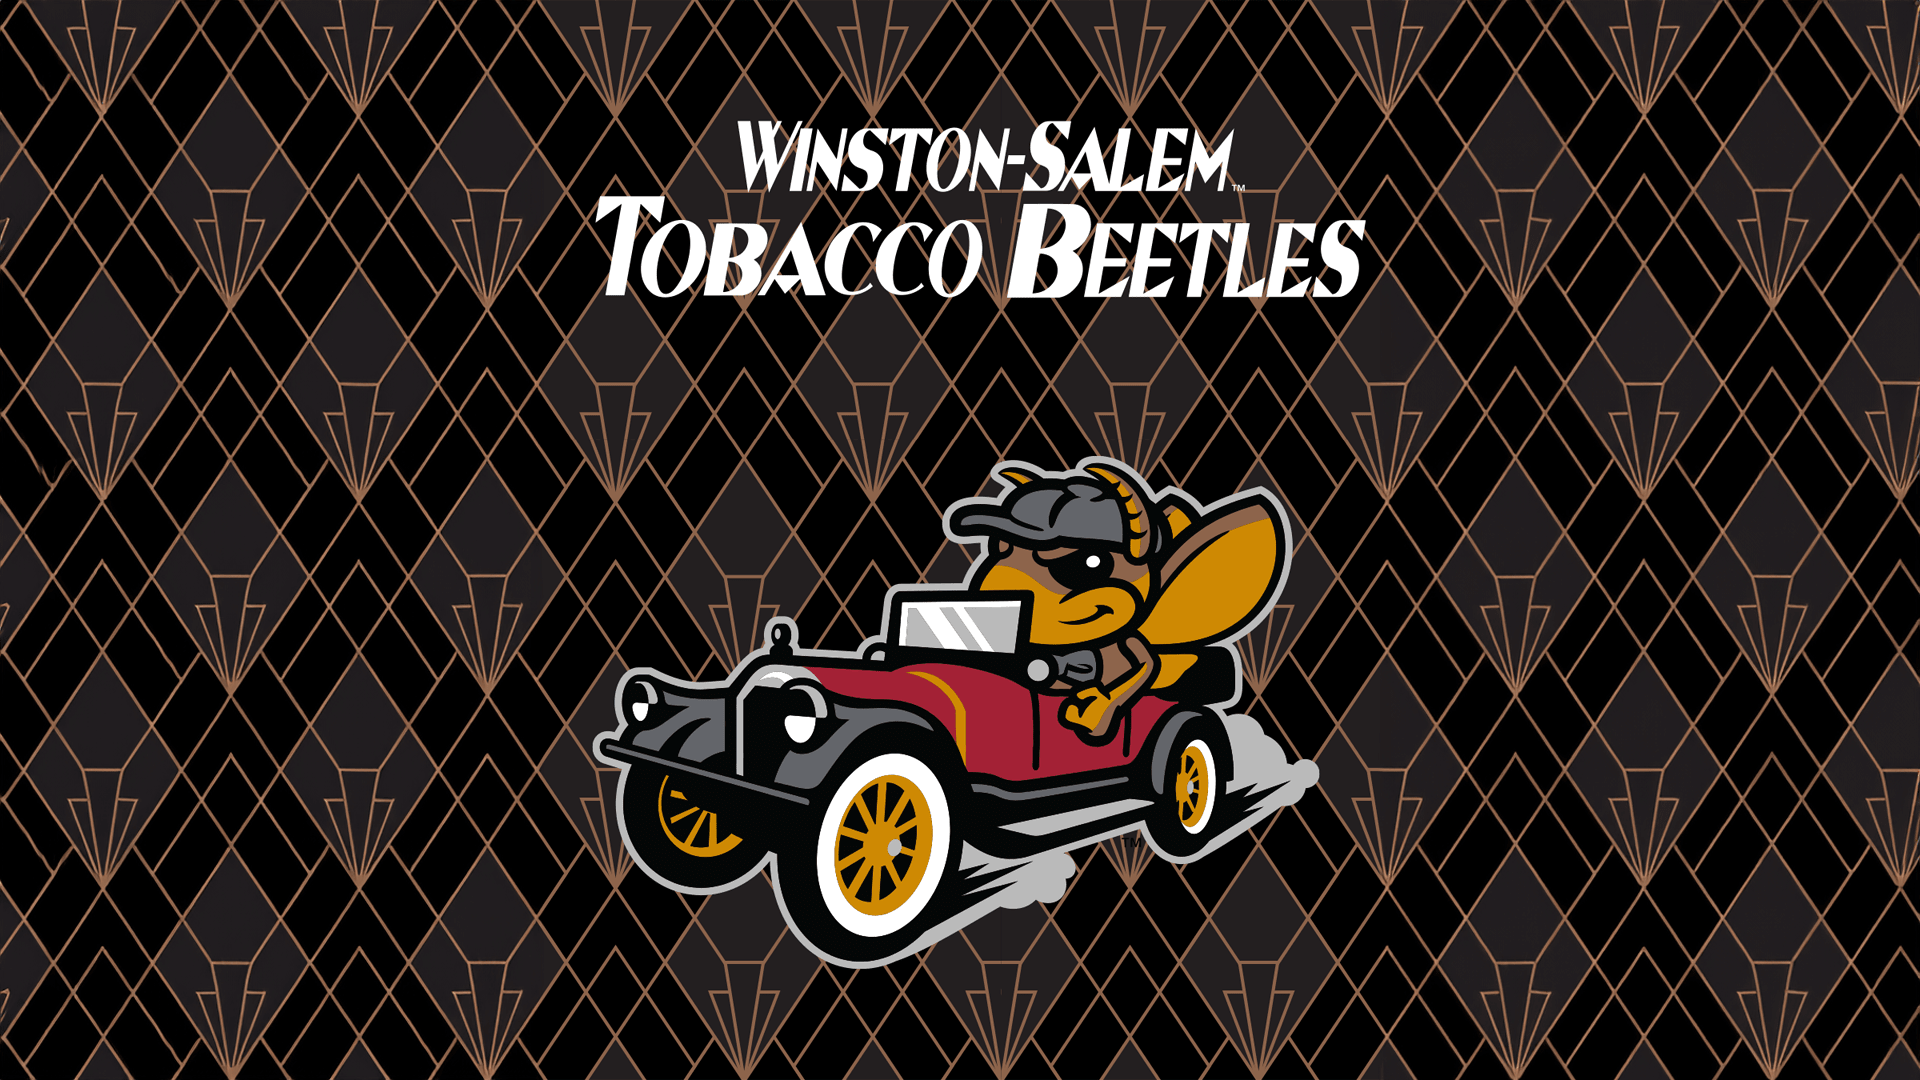 The Winston-Salem Tobacco Beetles